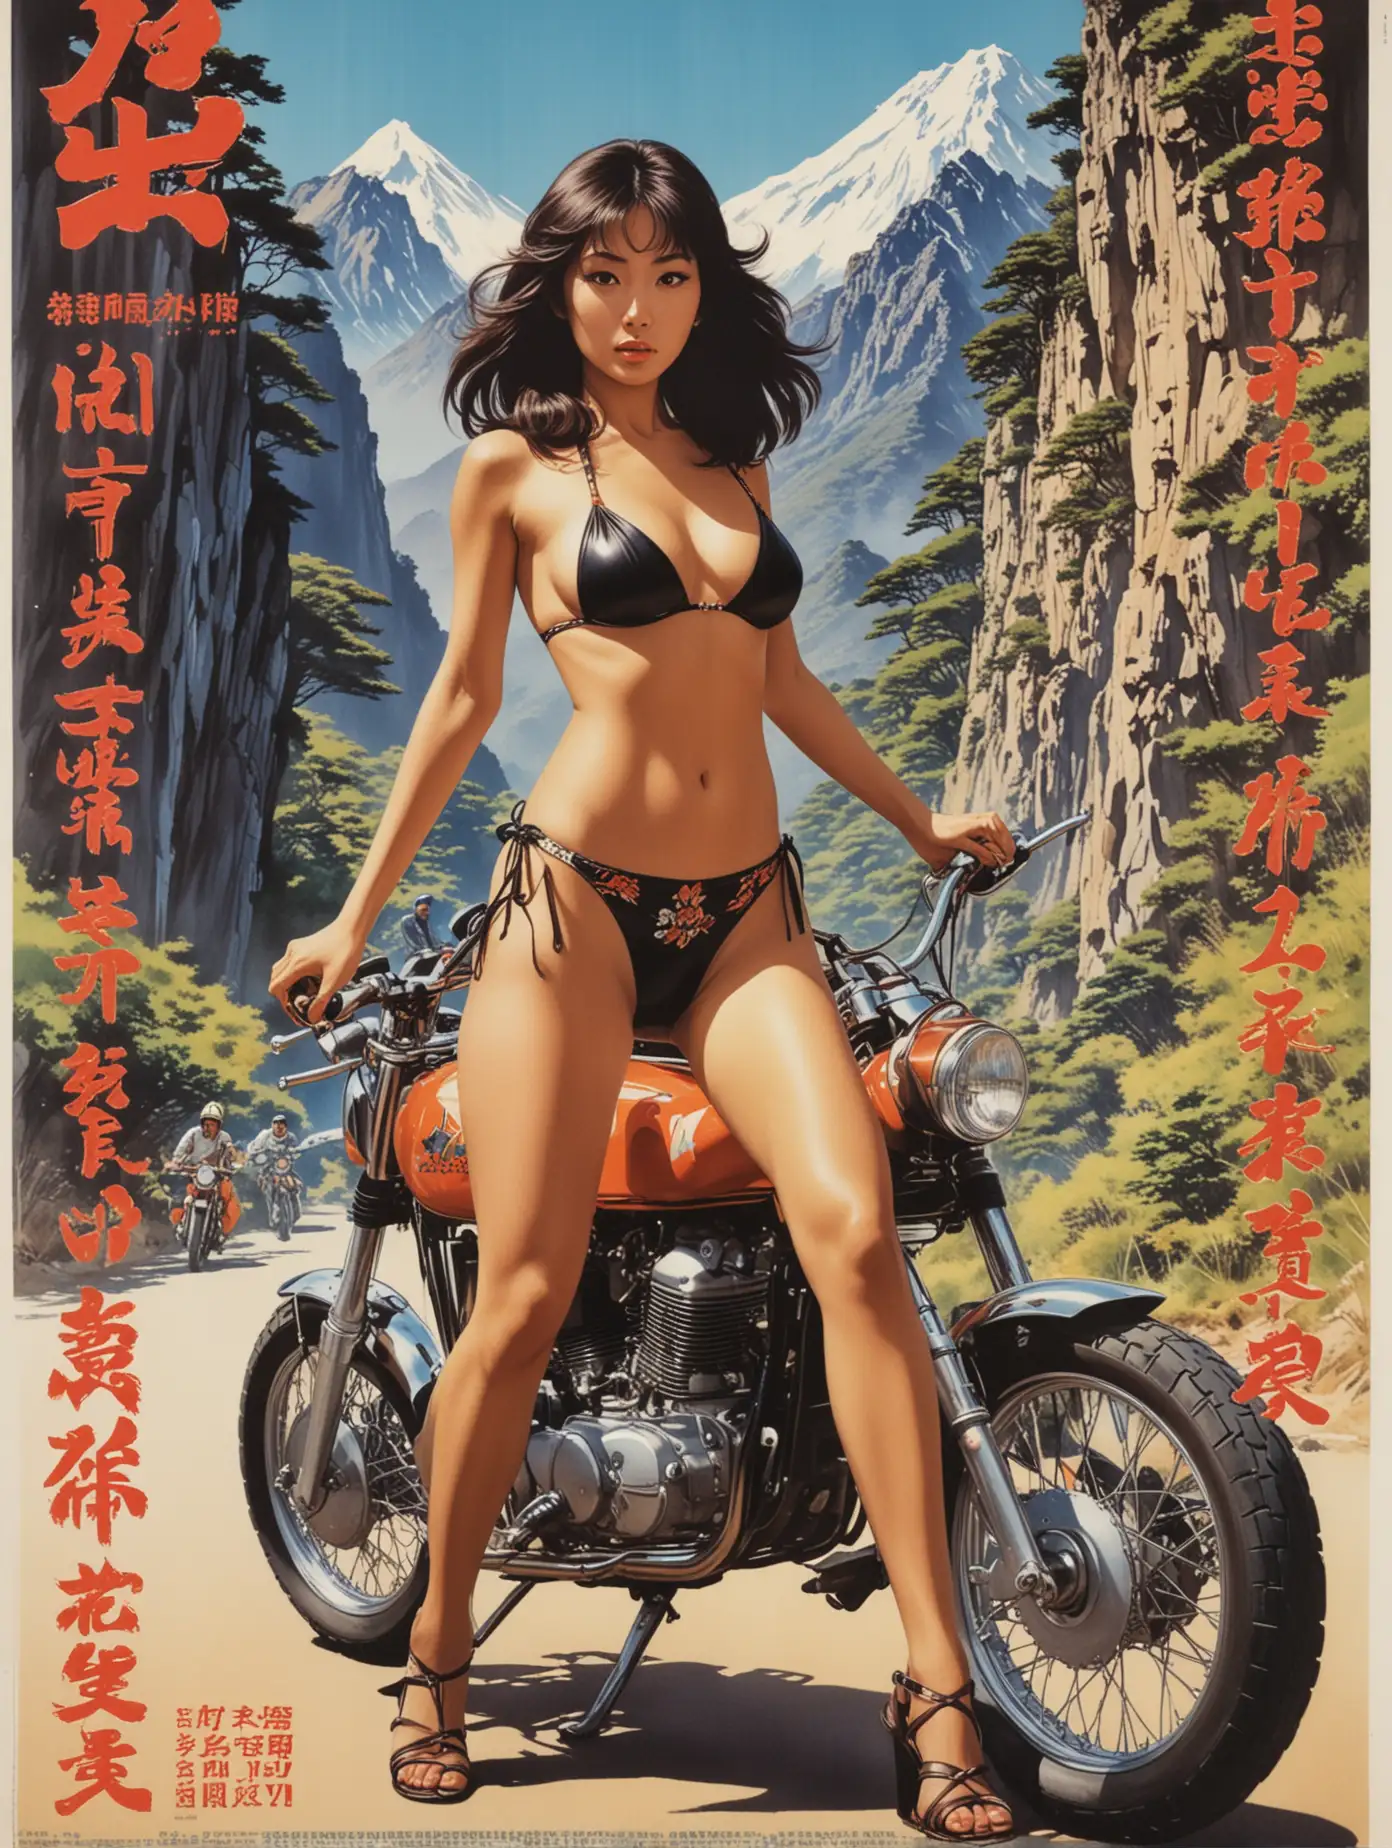 Sensual Bikini Girls Gang Riding Motorbikes Gaudy 1970s Japanese Exploitation Film Poster